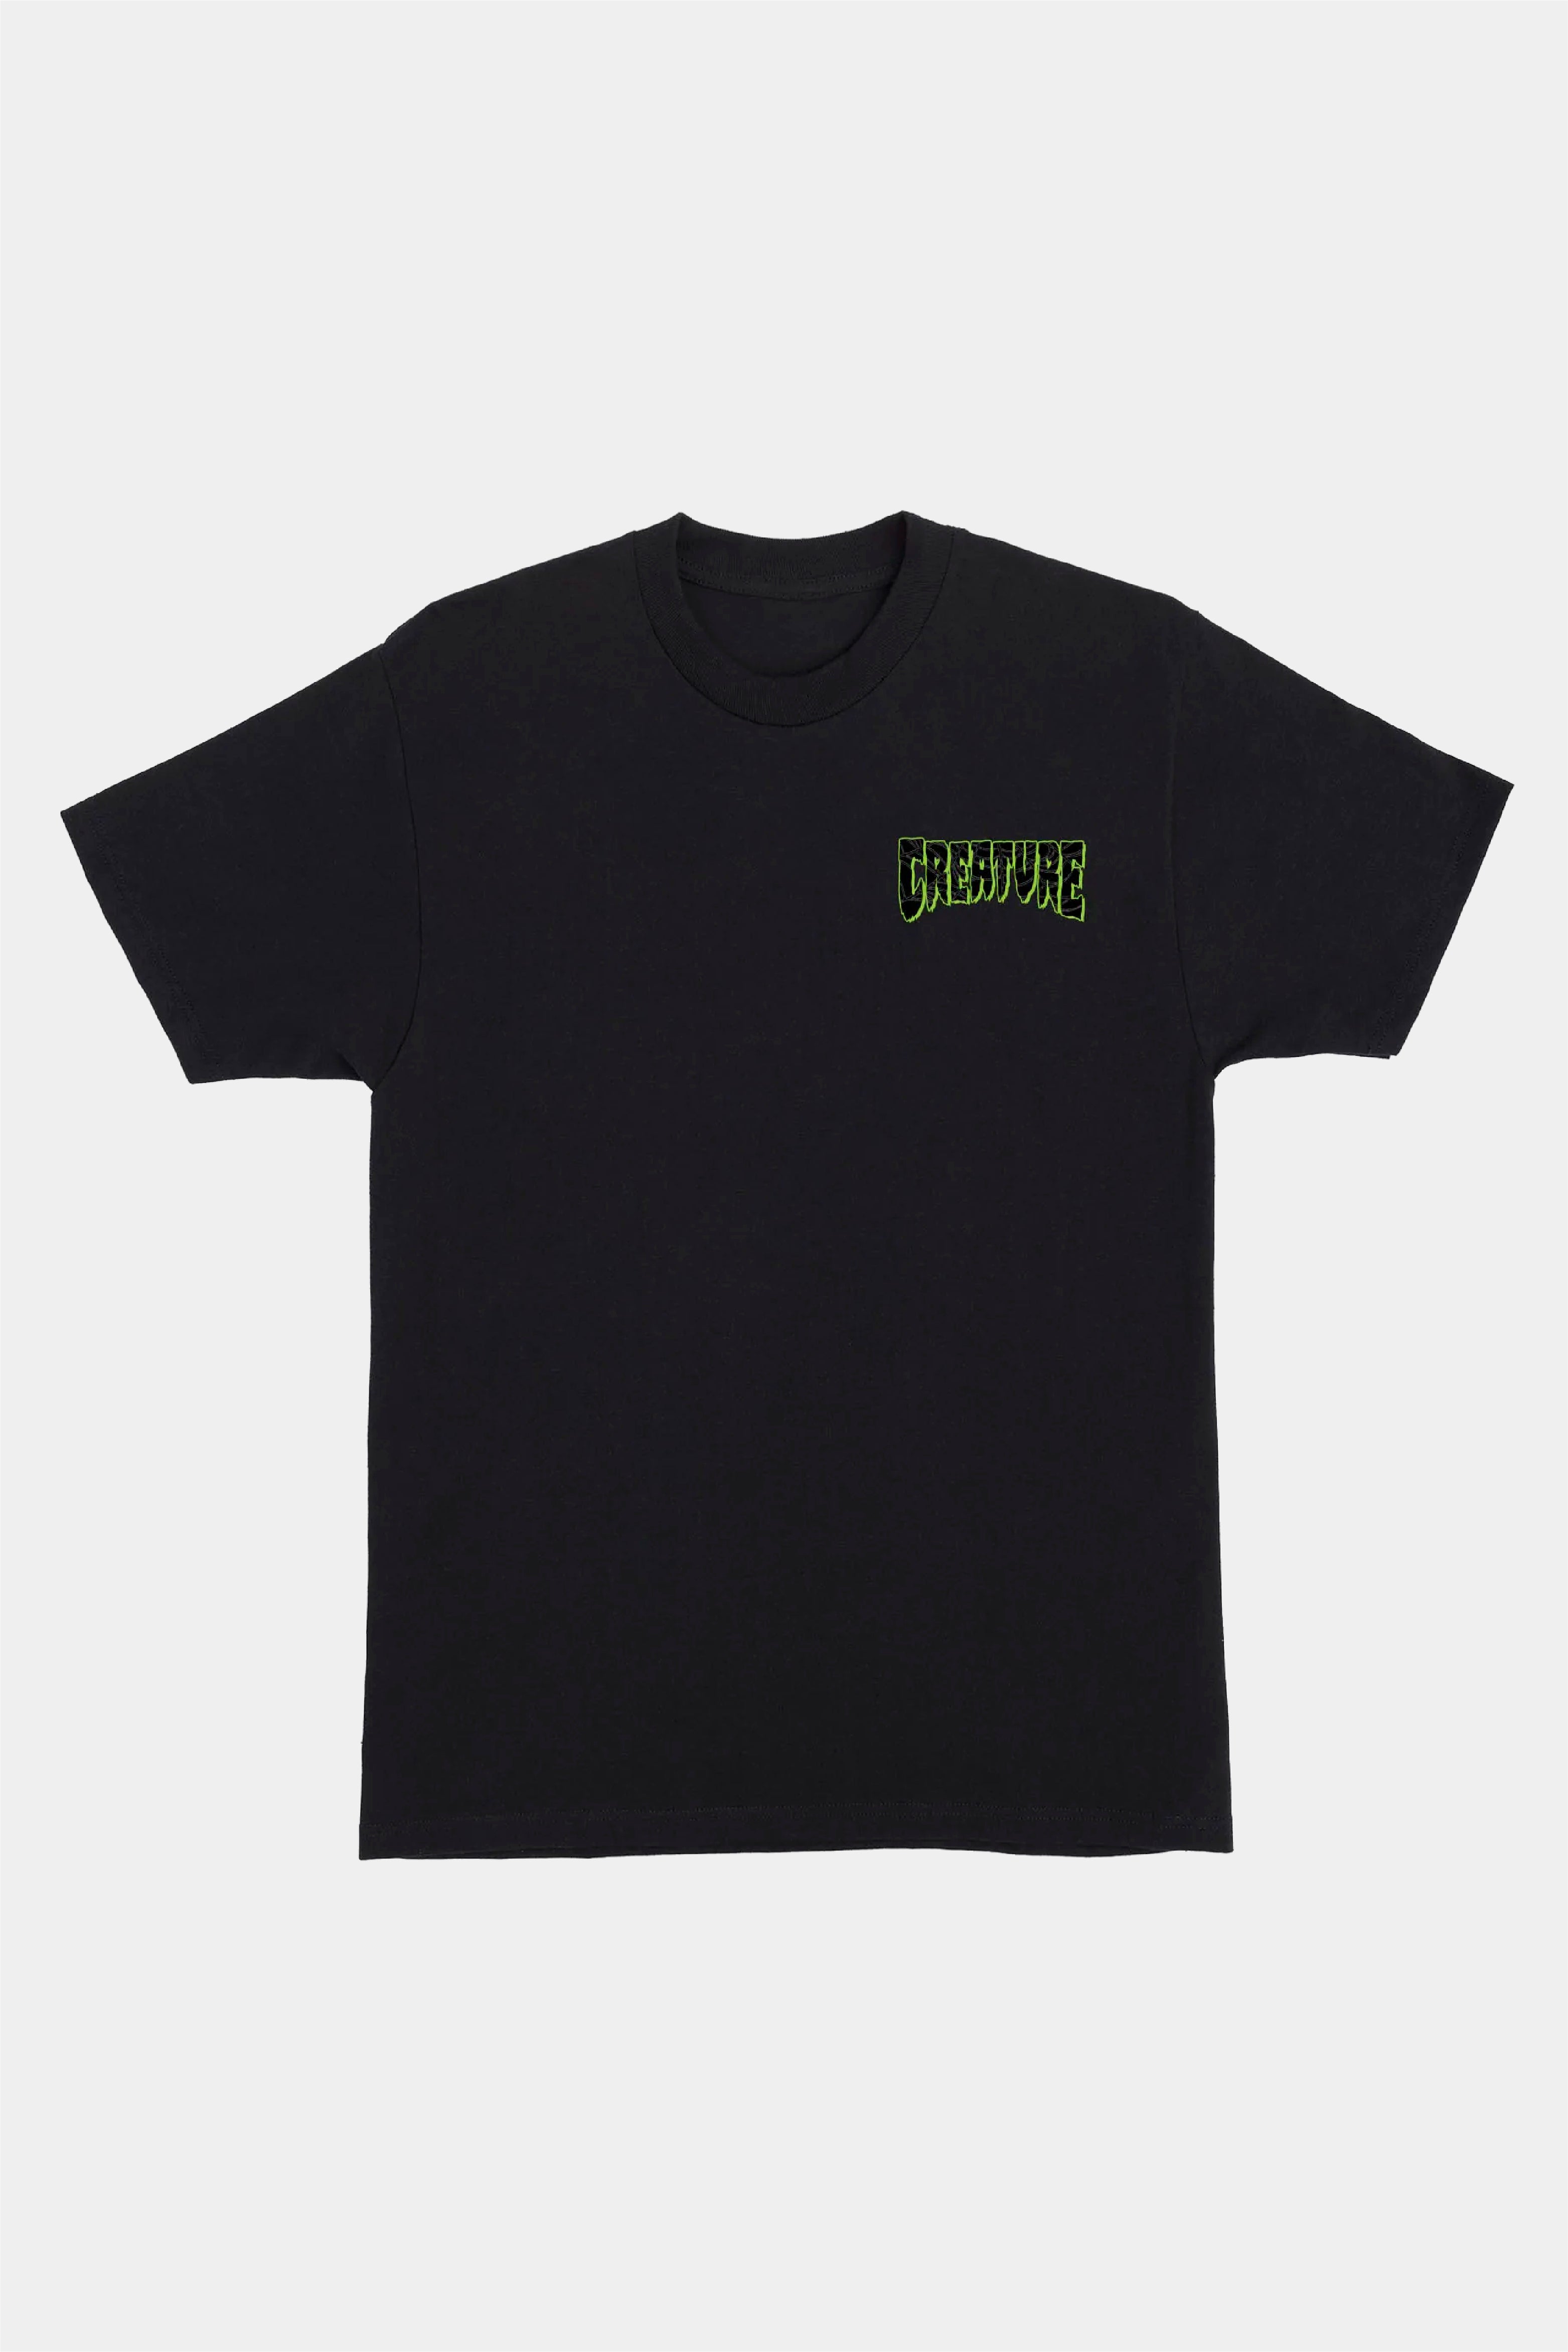 Selectshop FRAME - CREATURE Spindel Tee T-Shirts Concept Store Dubai